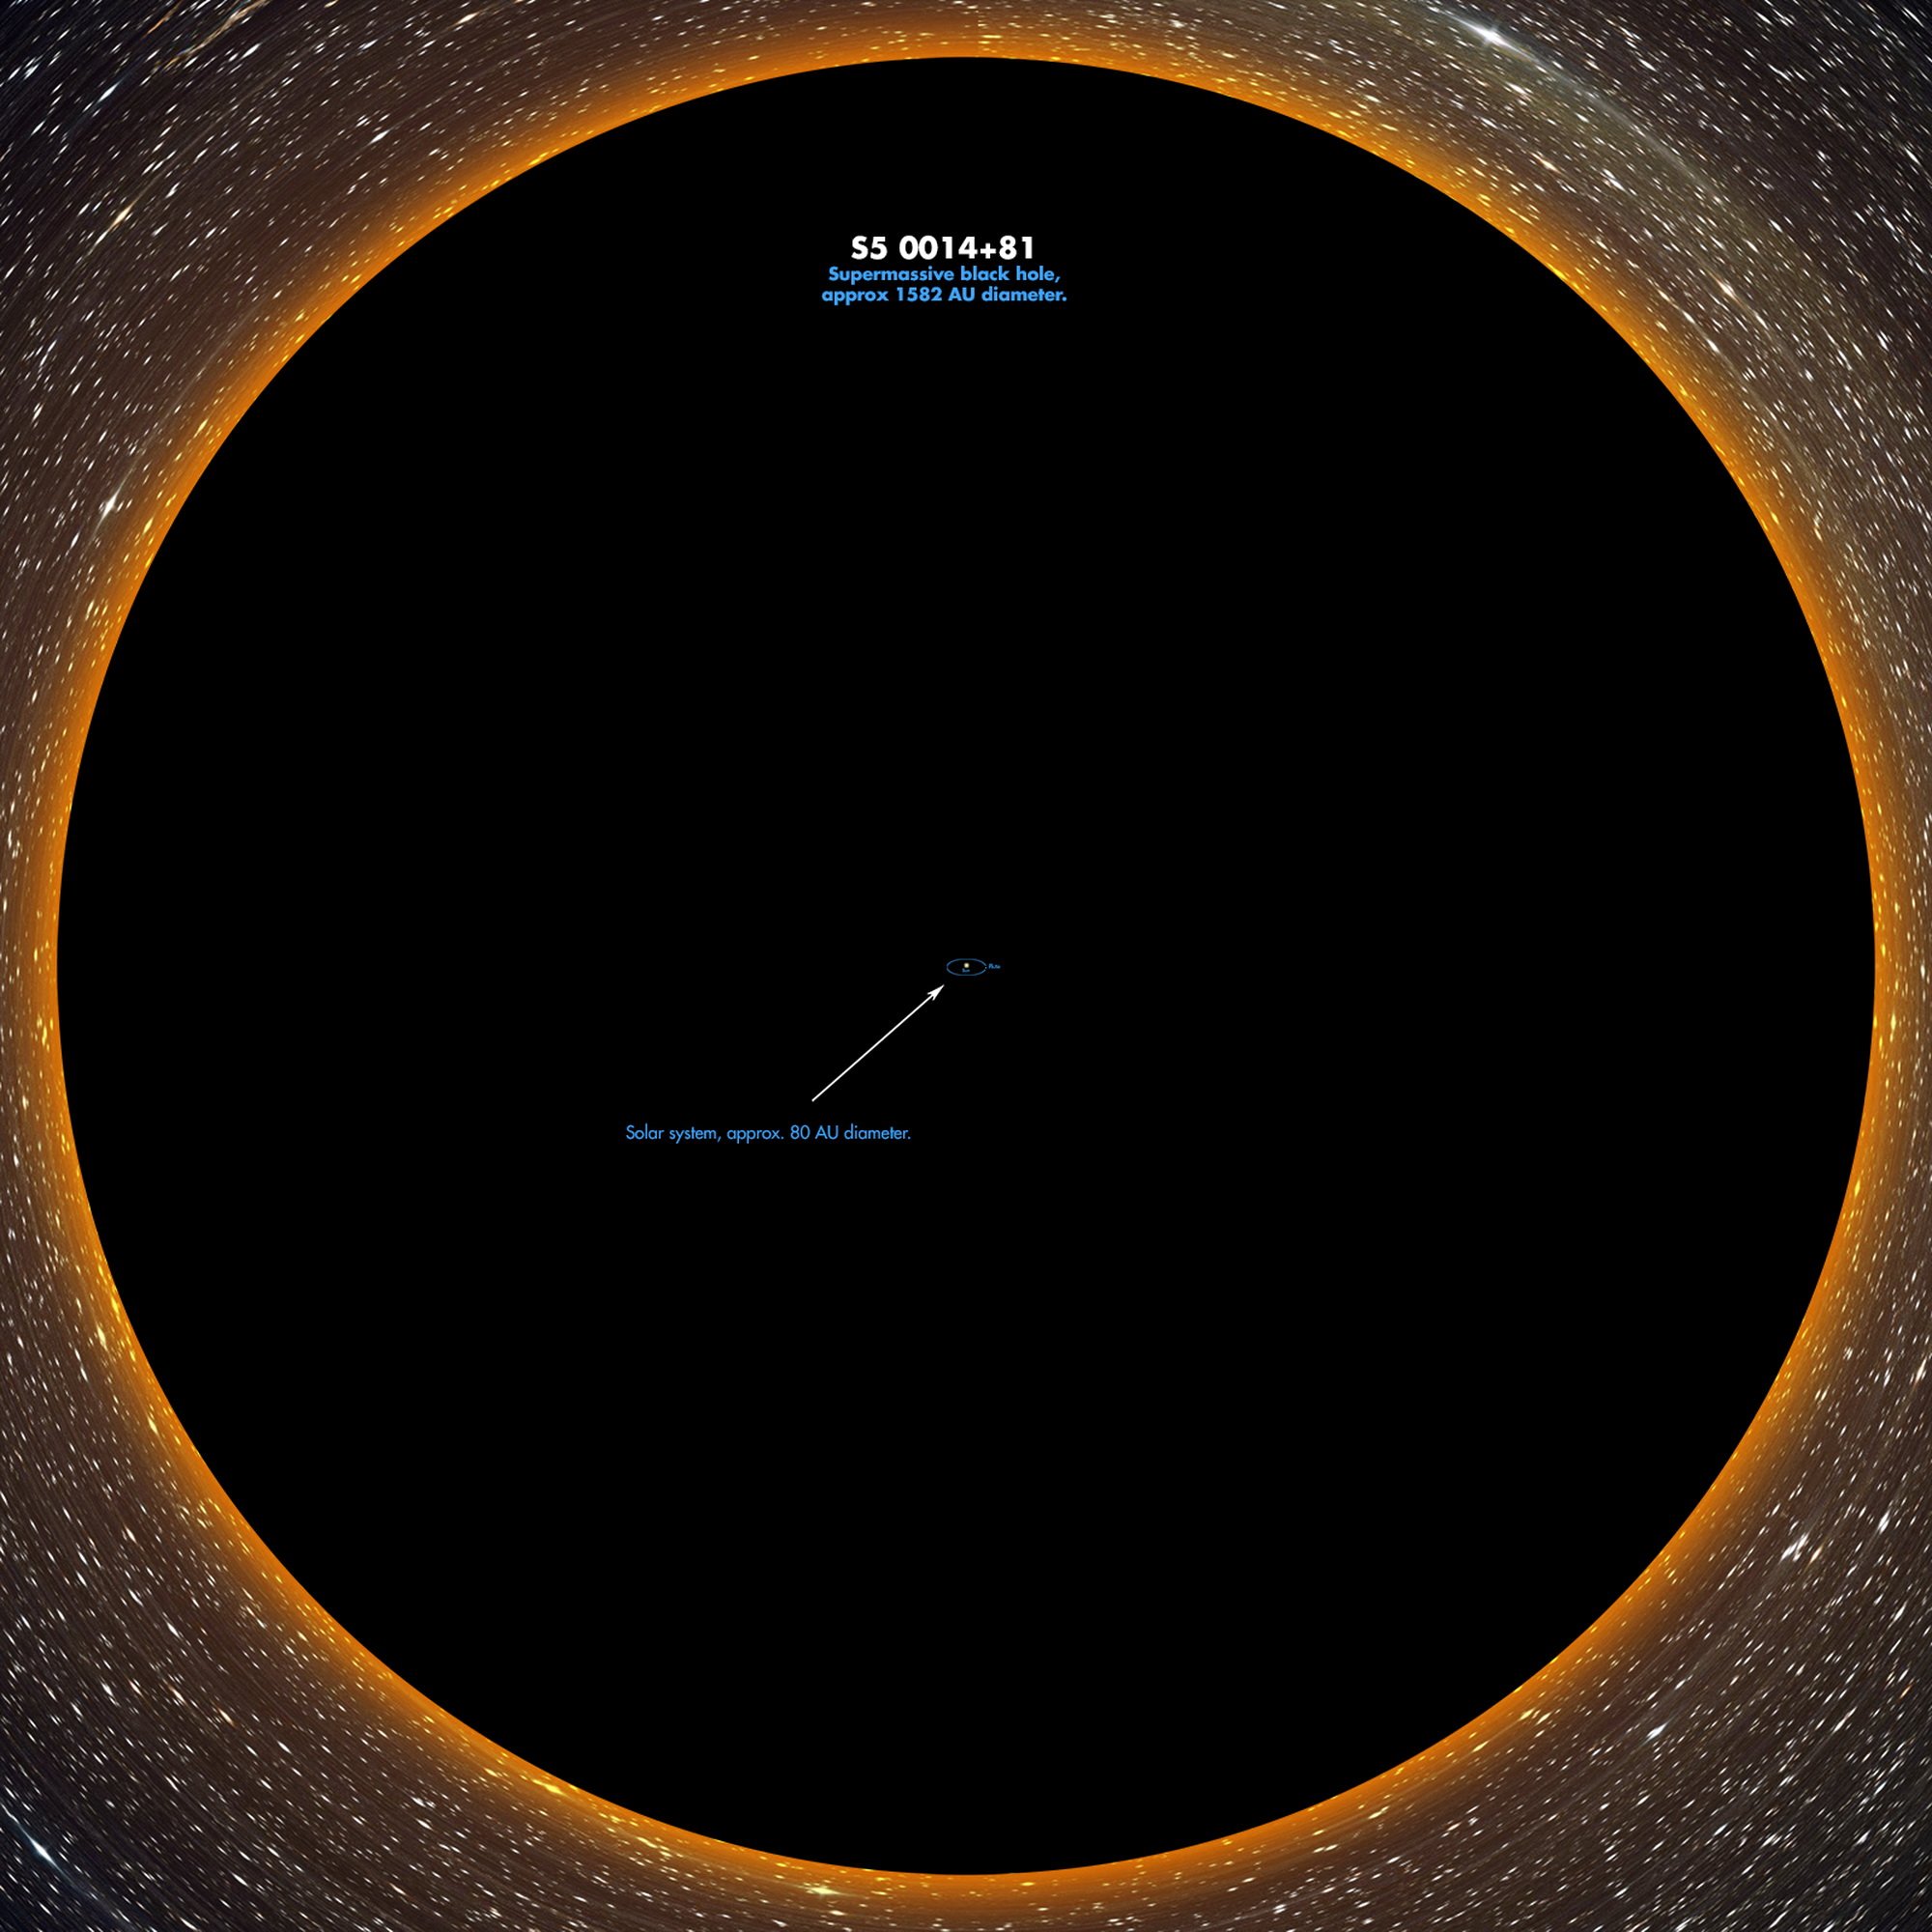 supermassive black hole vs solar system